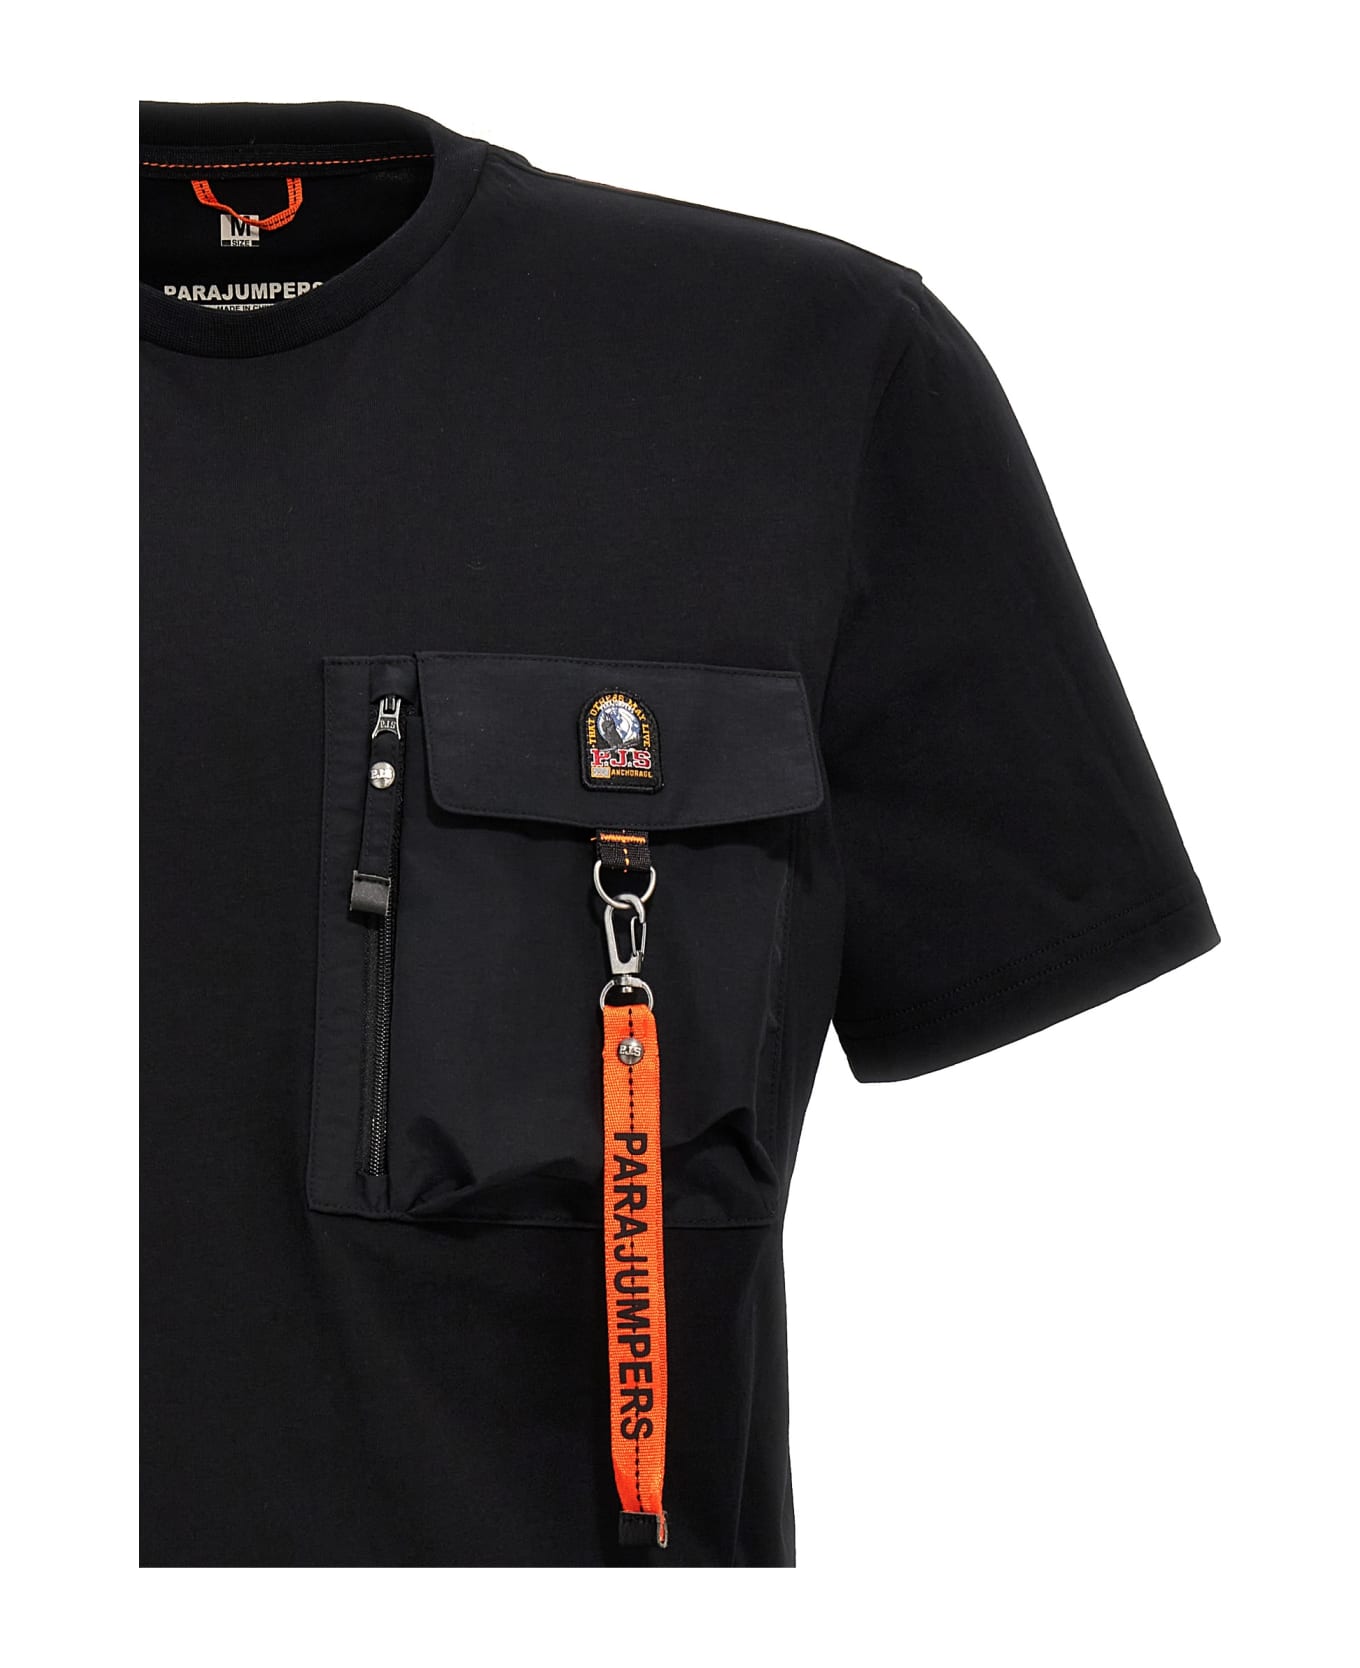 Parajumpers 'mojave' T-shirt - Black シャツ